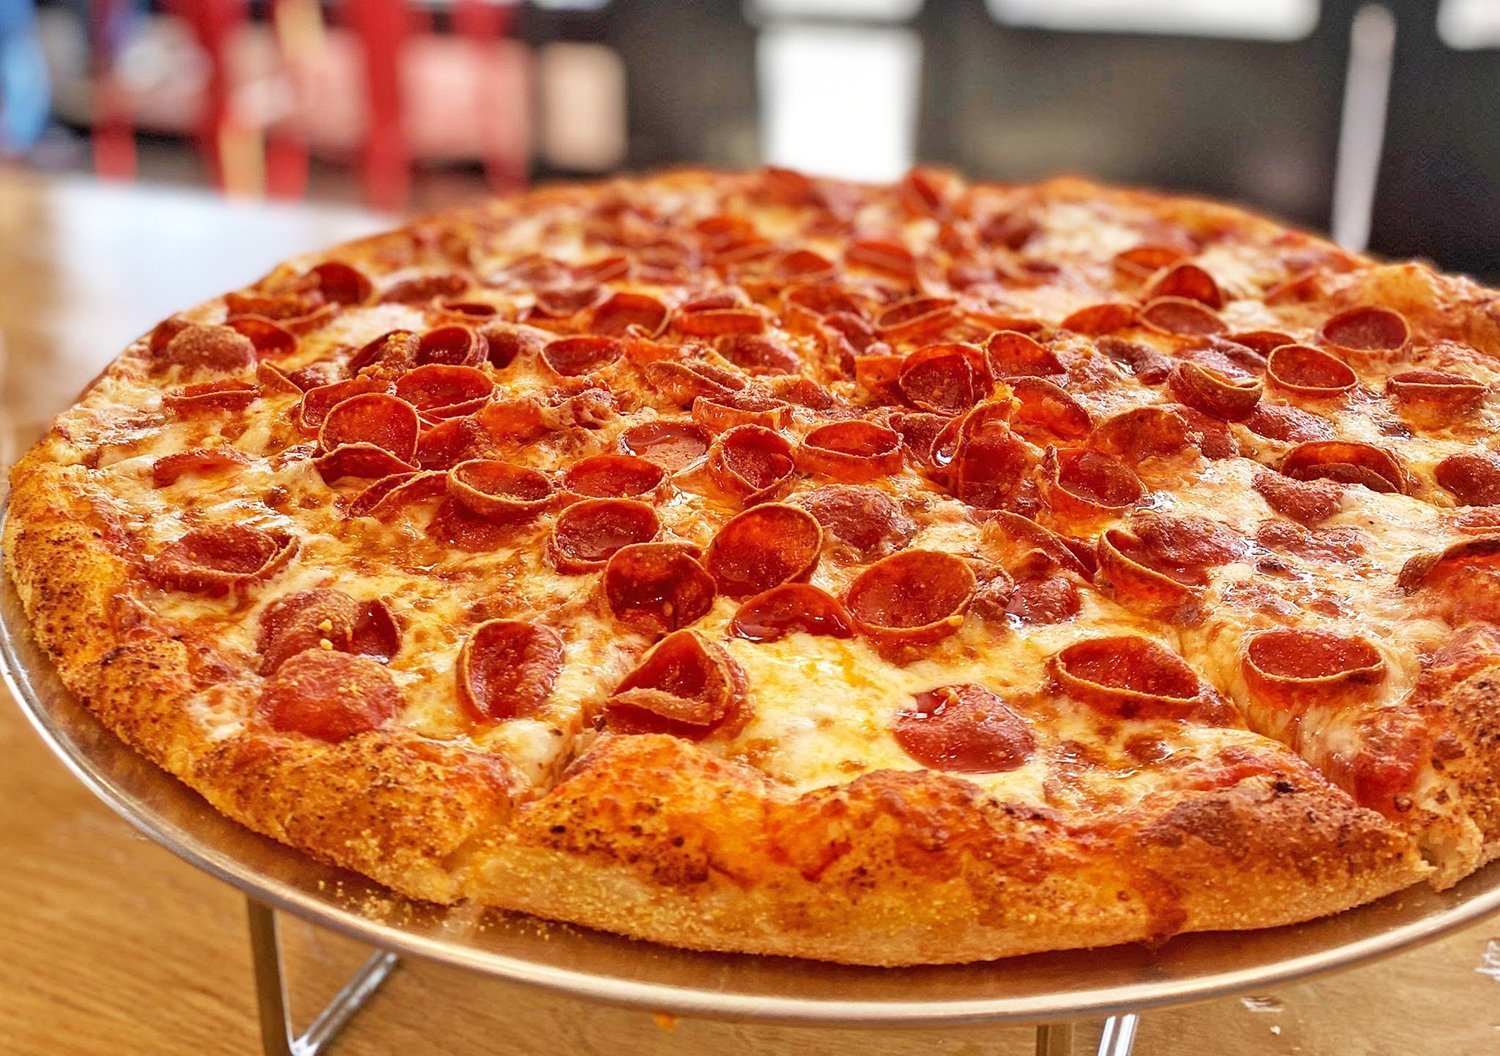 Is pizza homogeneous or heterogeneous